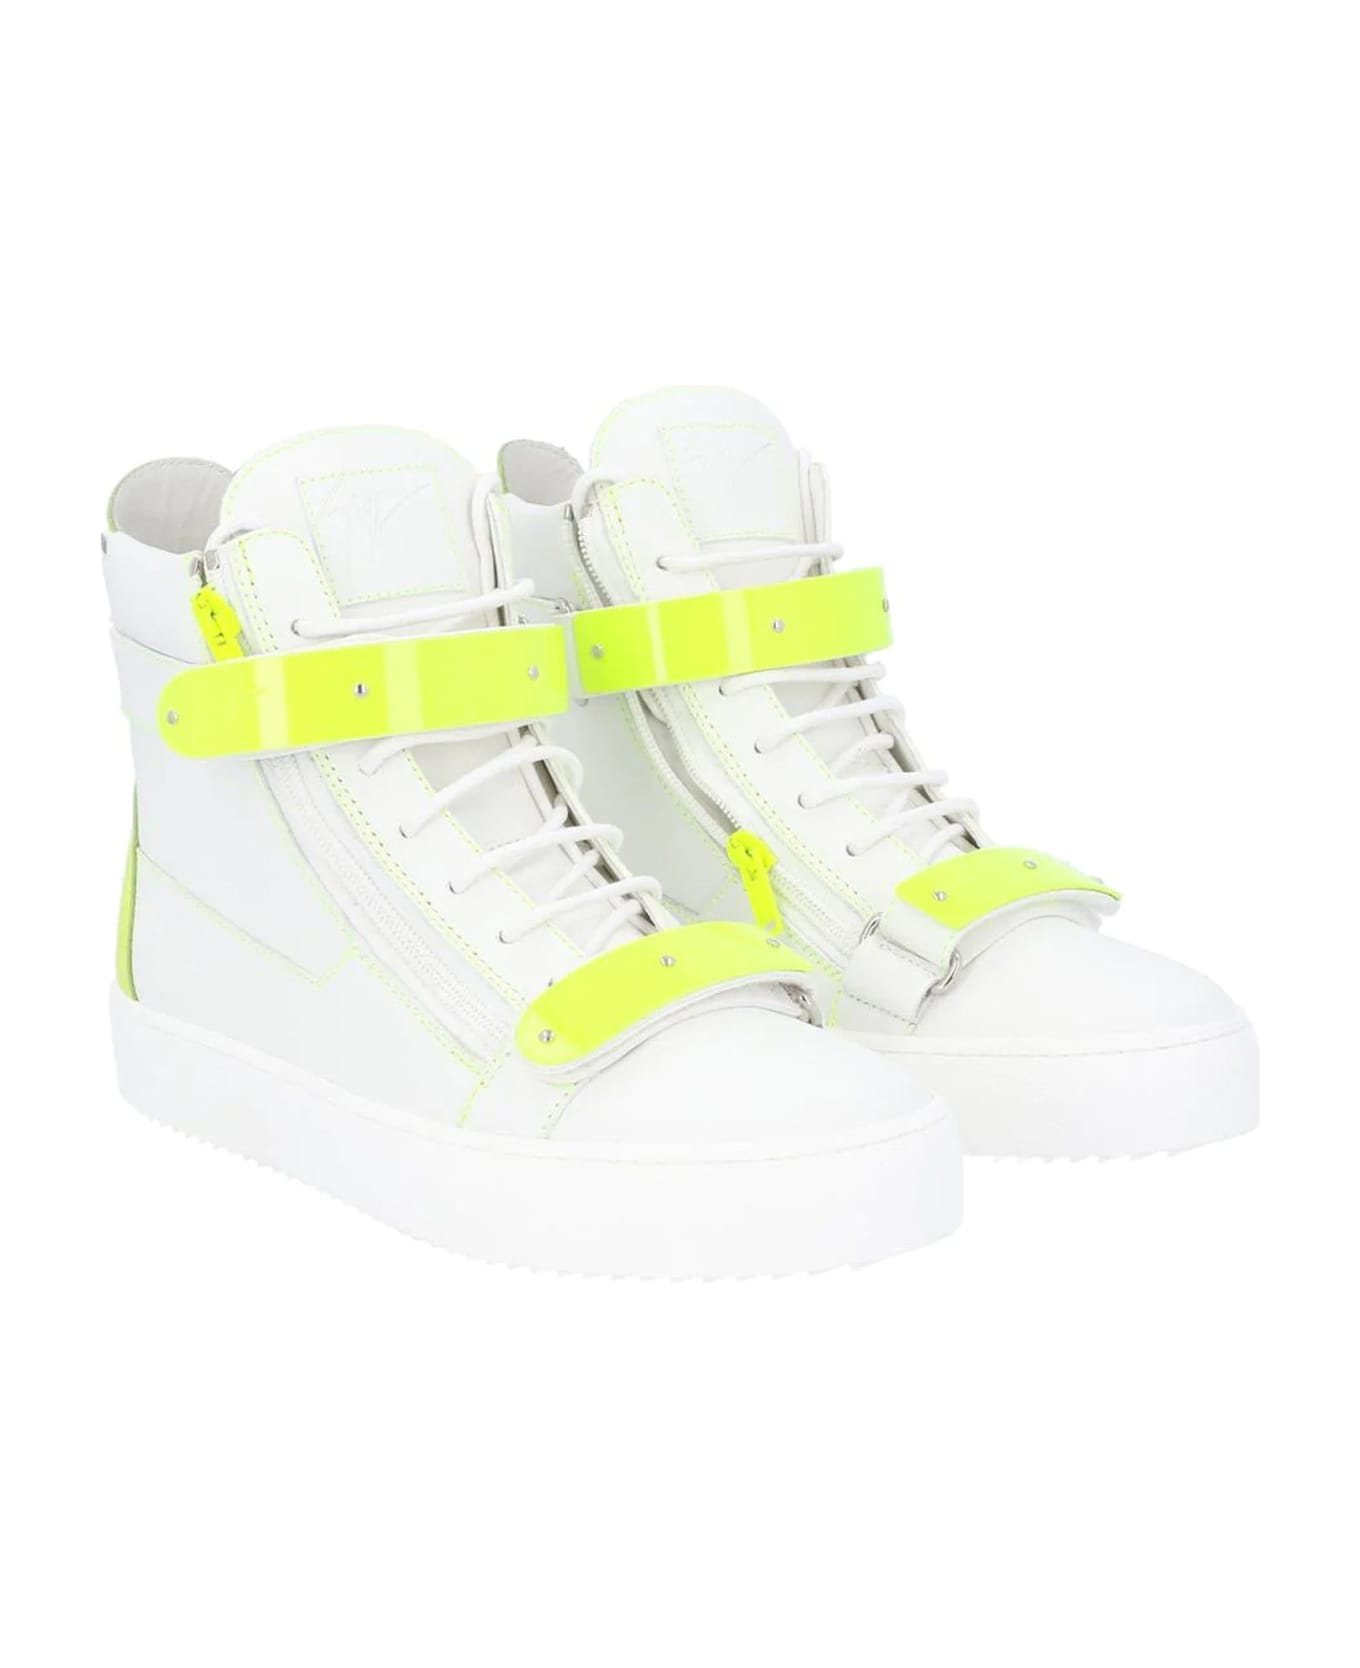 Giuseppe Zanotti Leather Sneakers - White